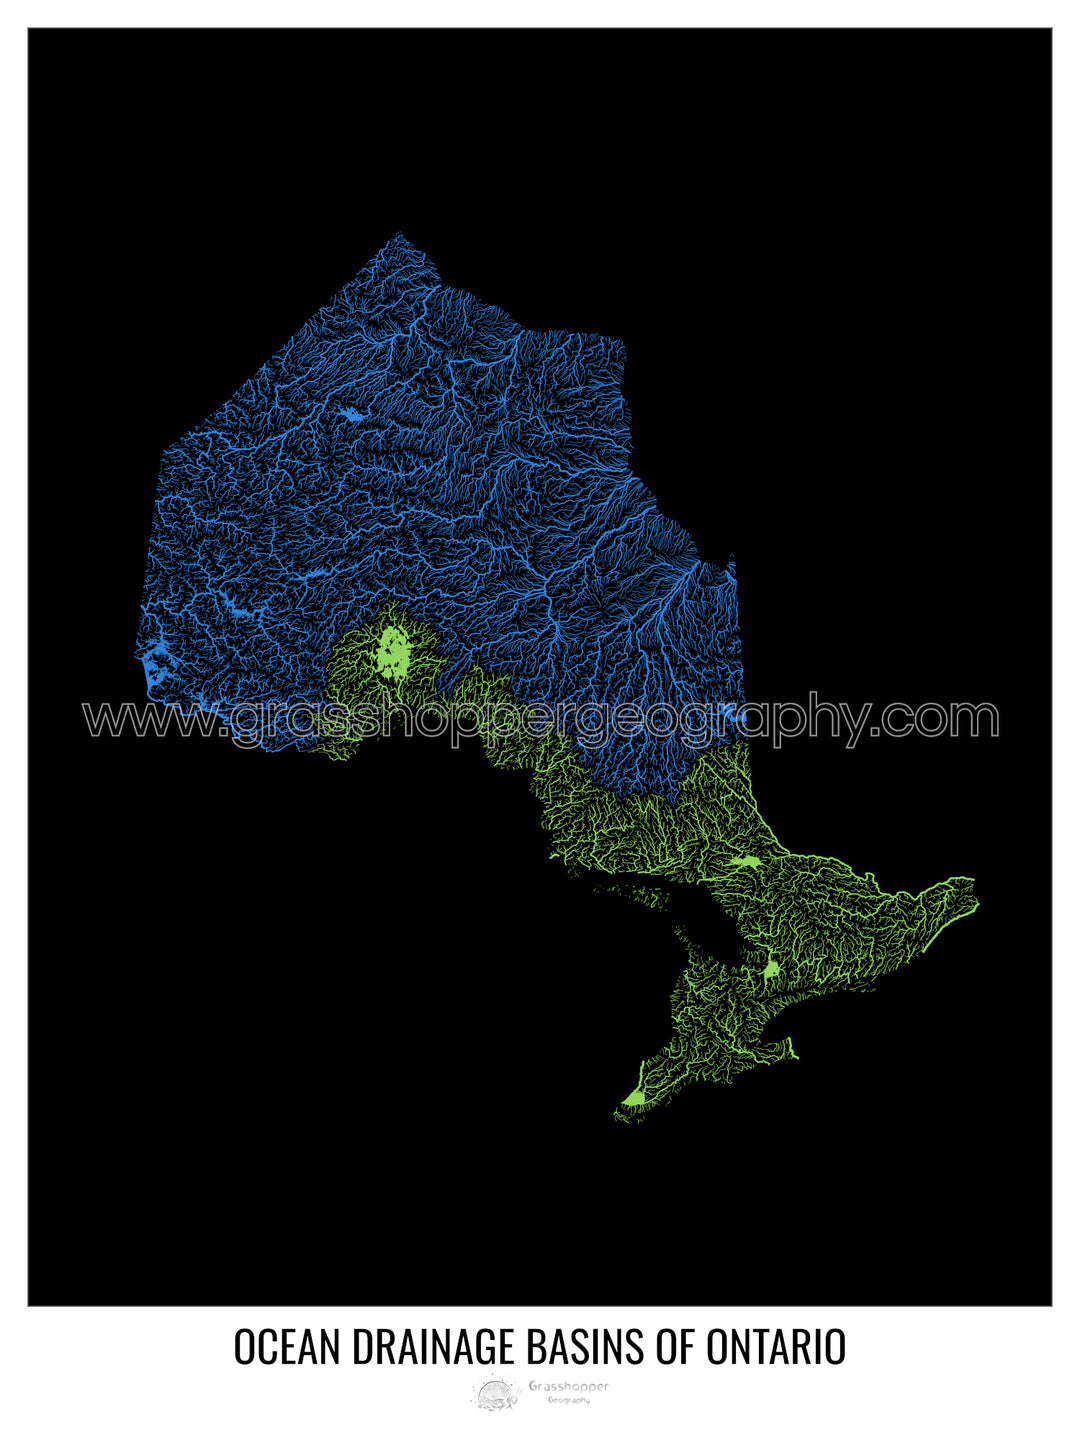 Ontario - Carte du bassin versant océanique, noir v1 - Impression d'art photo